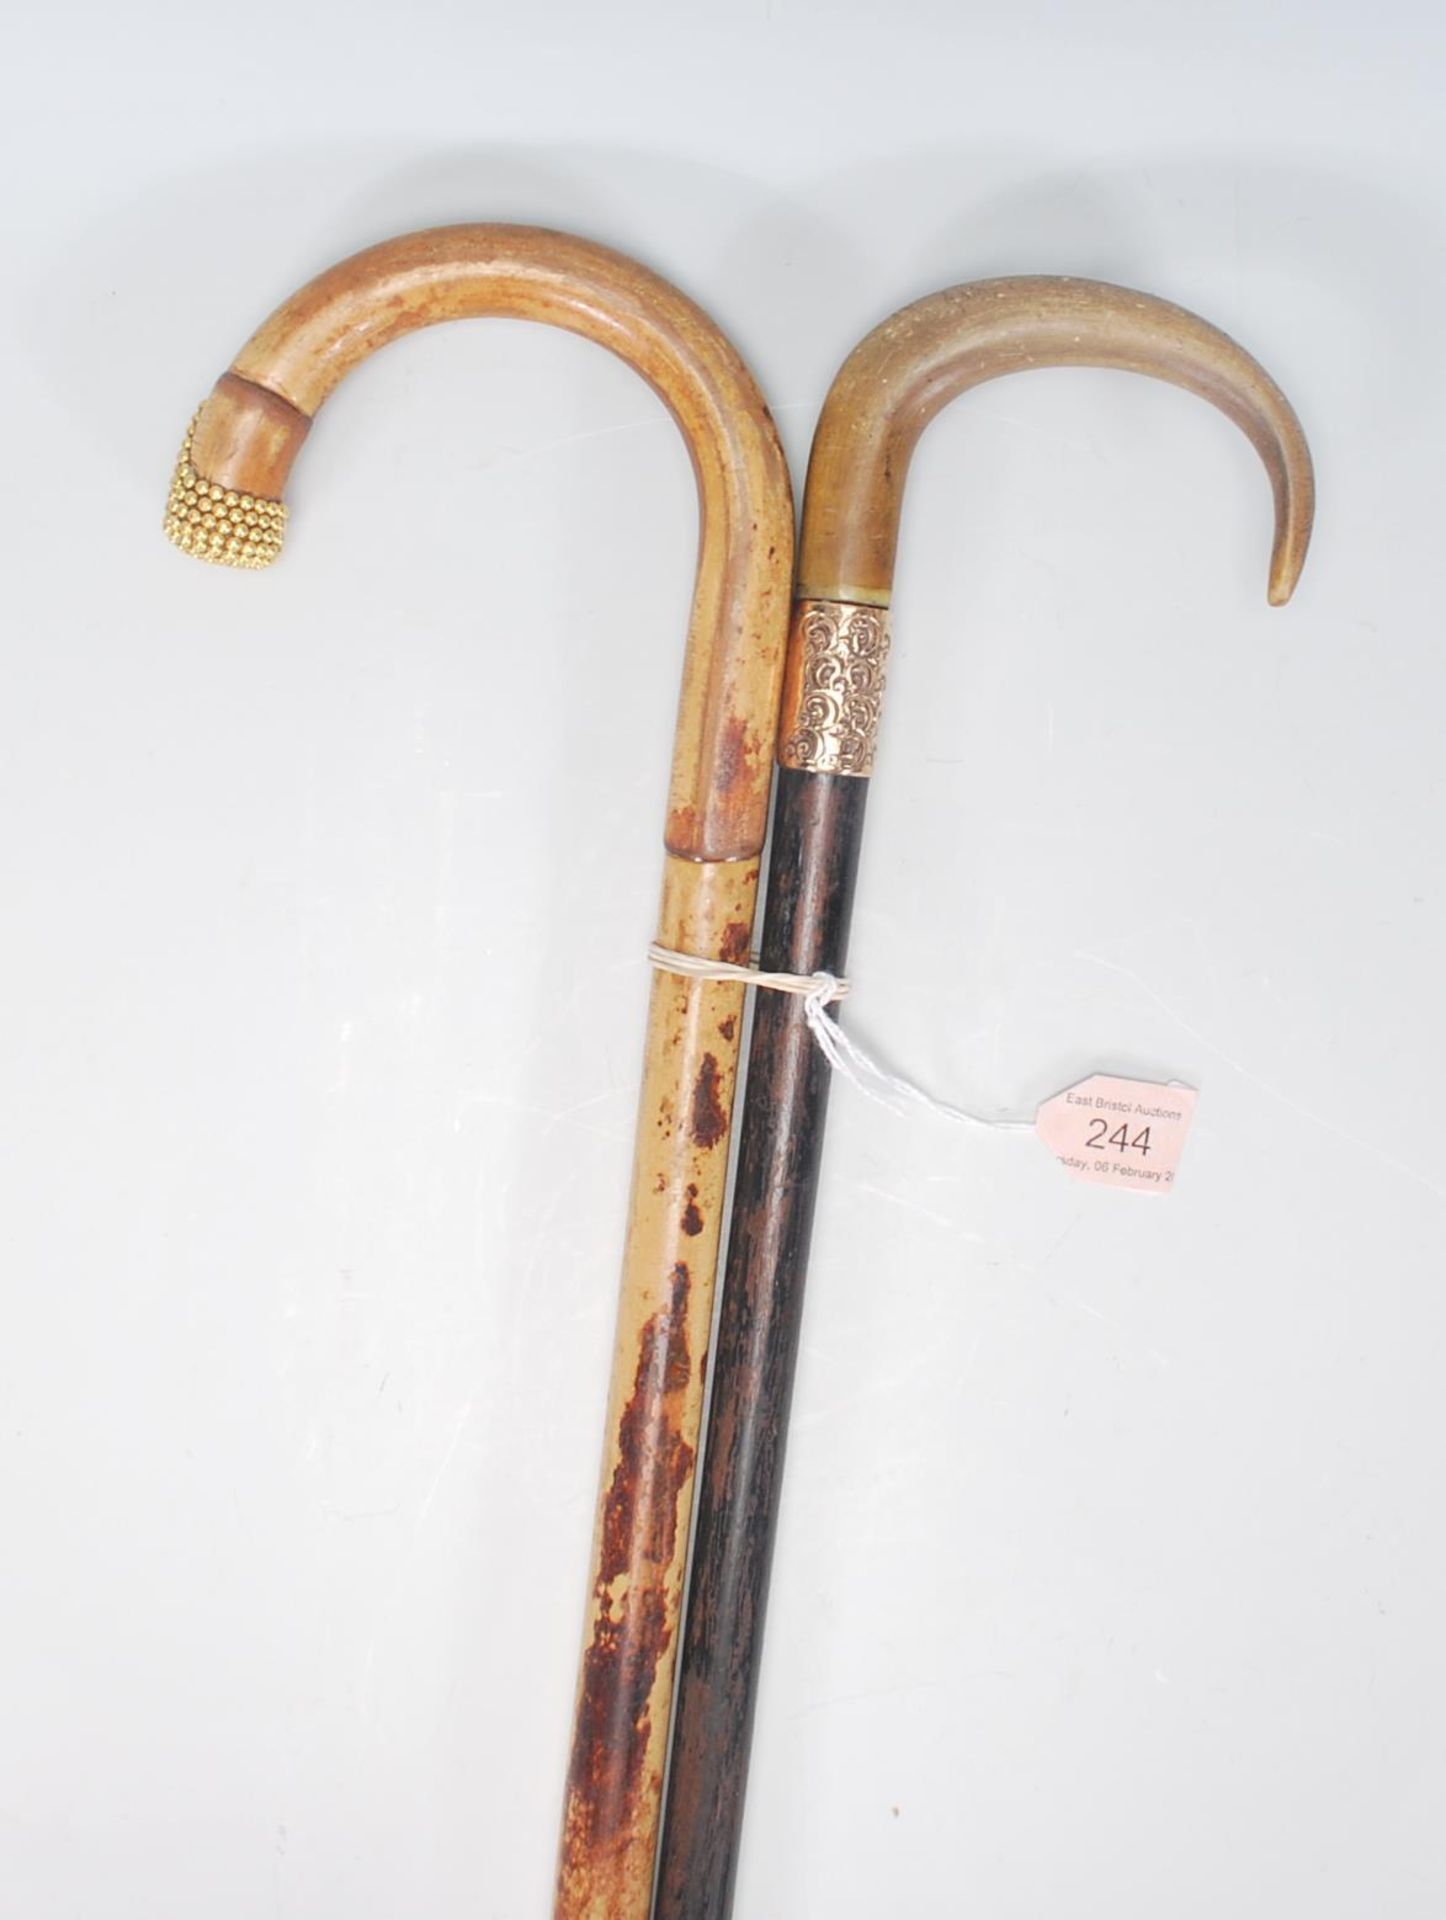 A pair of 20th century wooden walking sticks havin